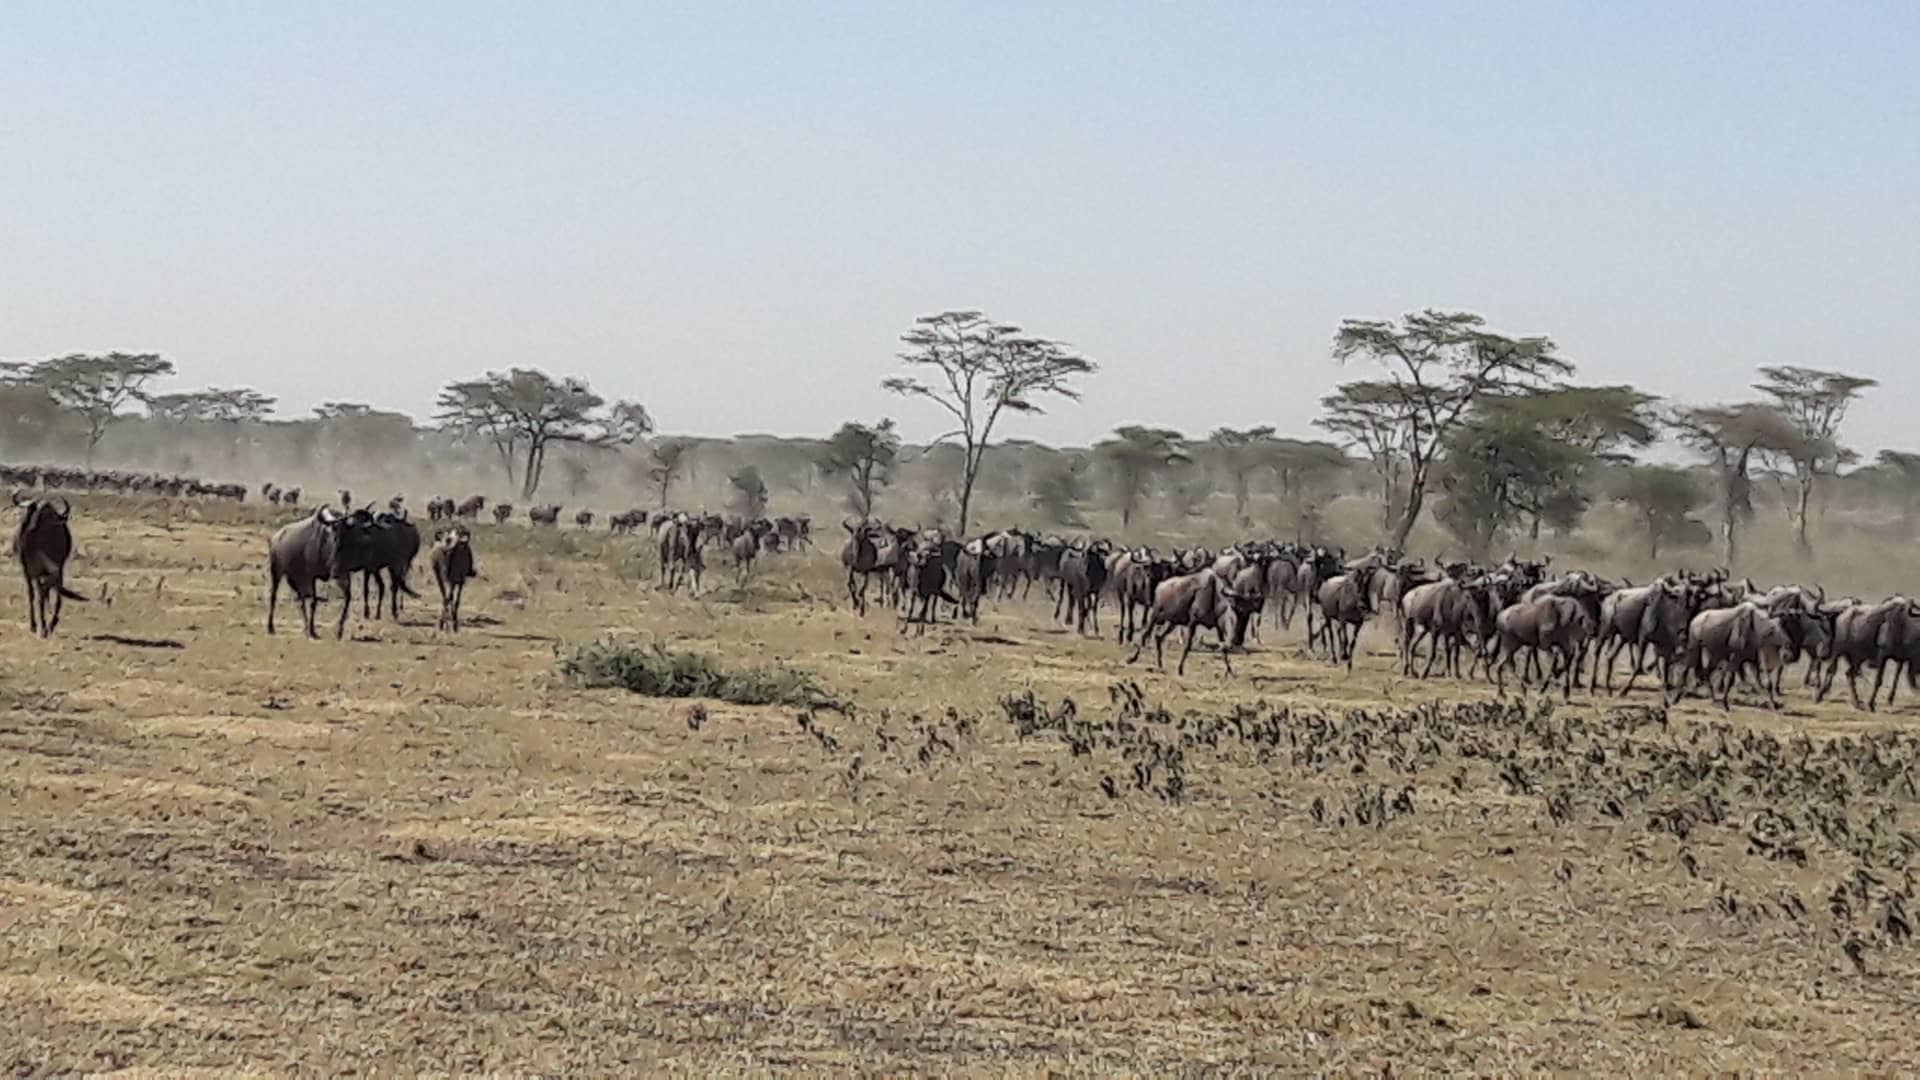 Ndutu – Serengeti Migration Area